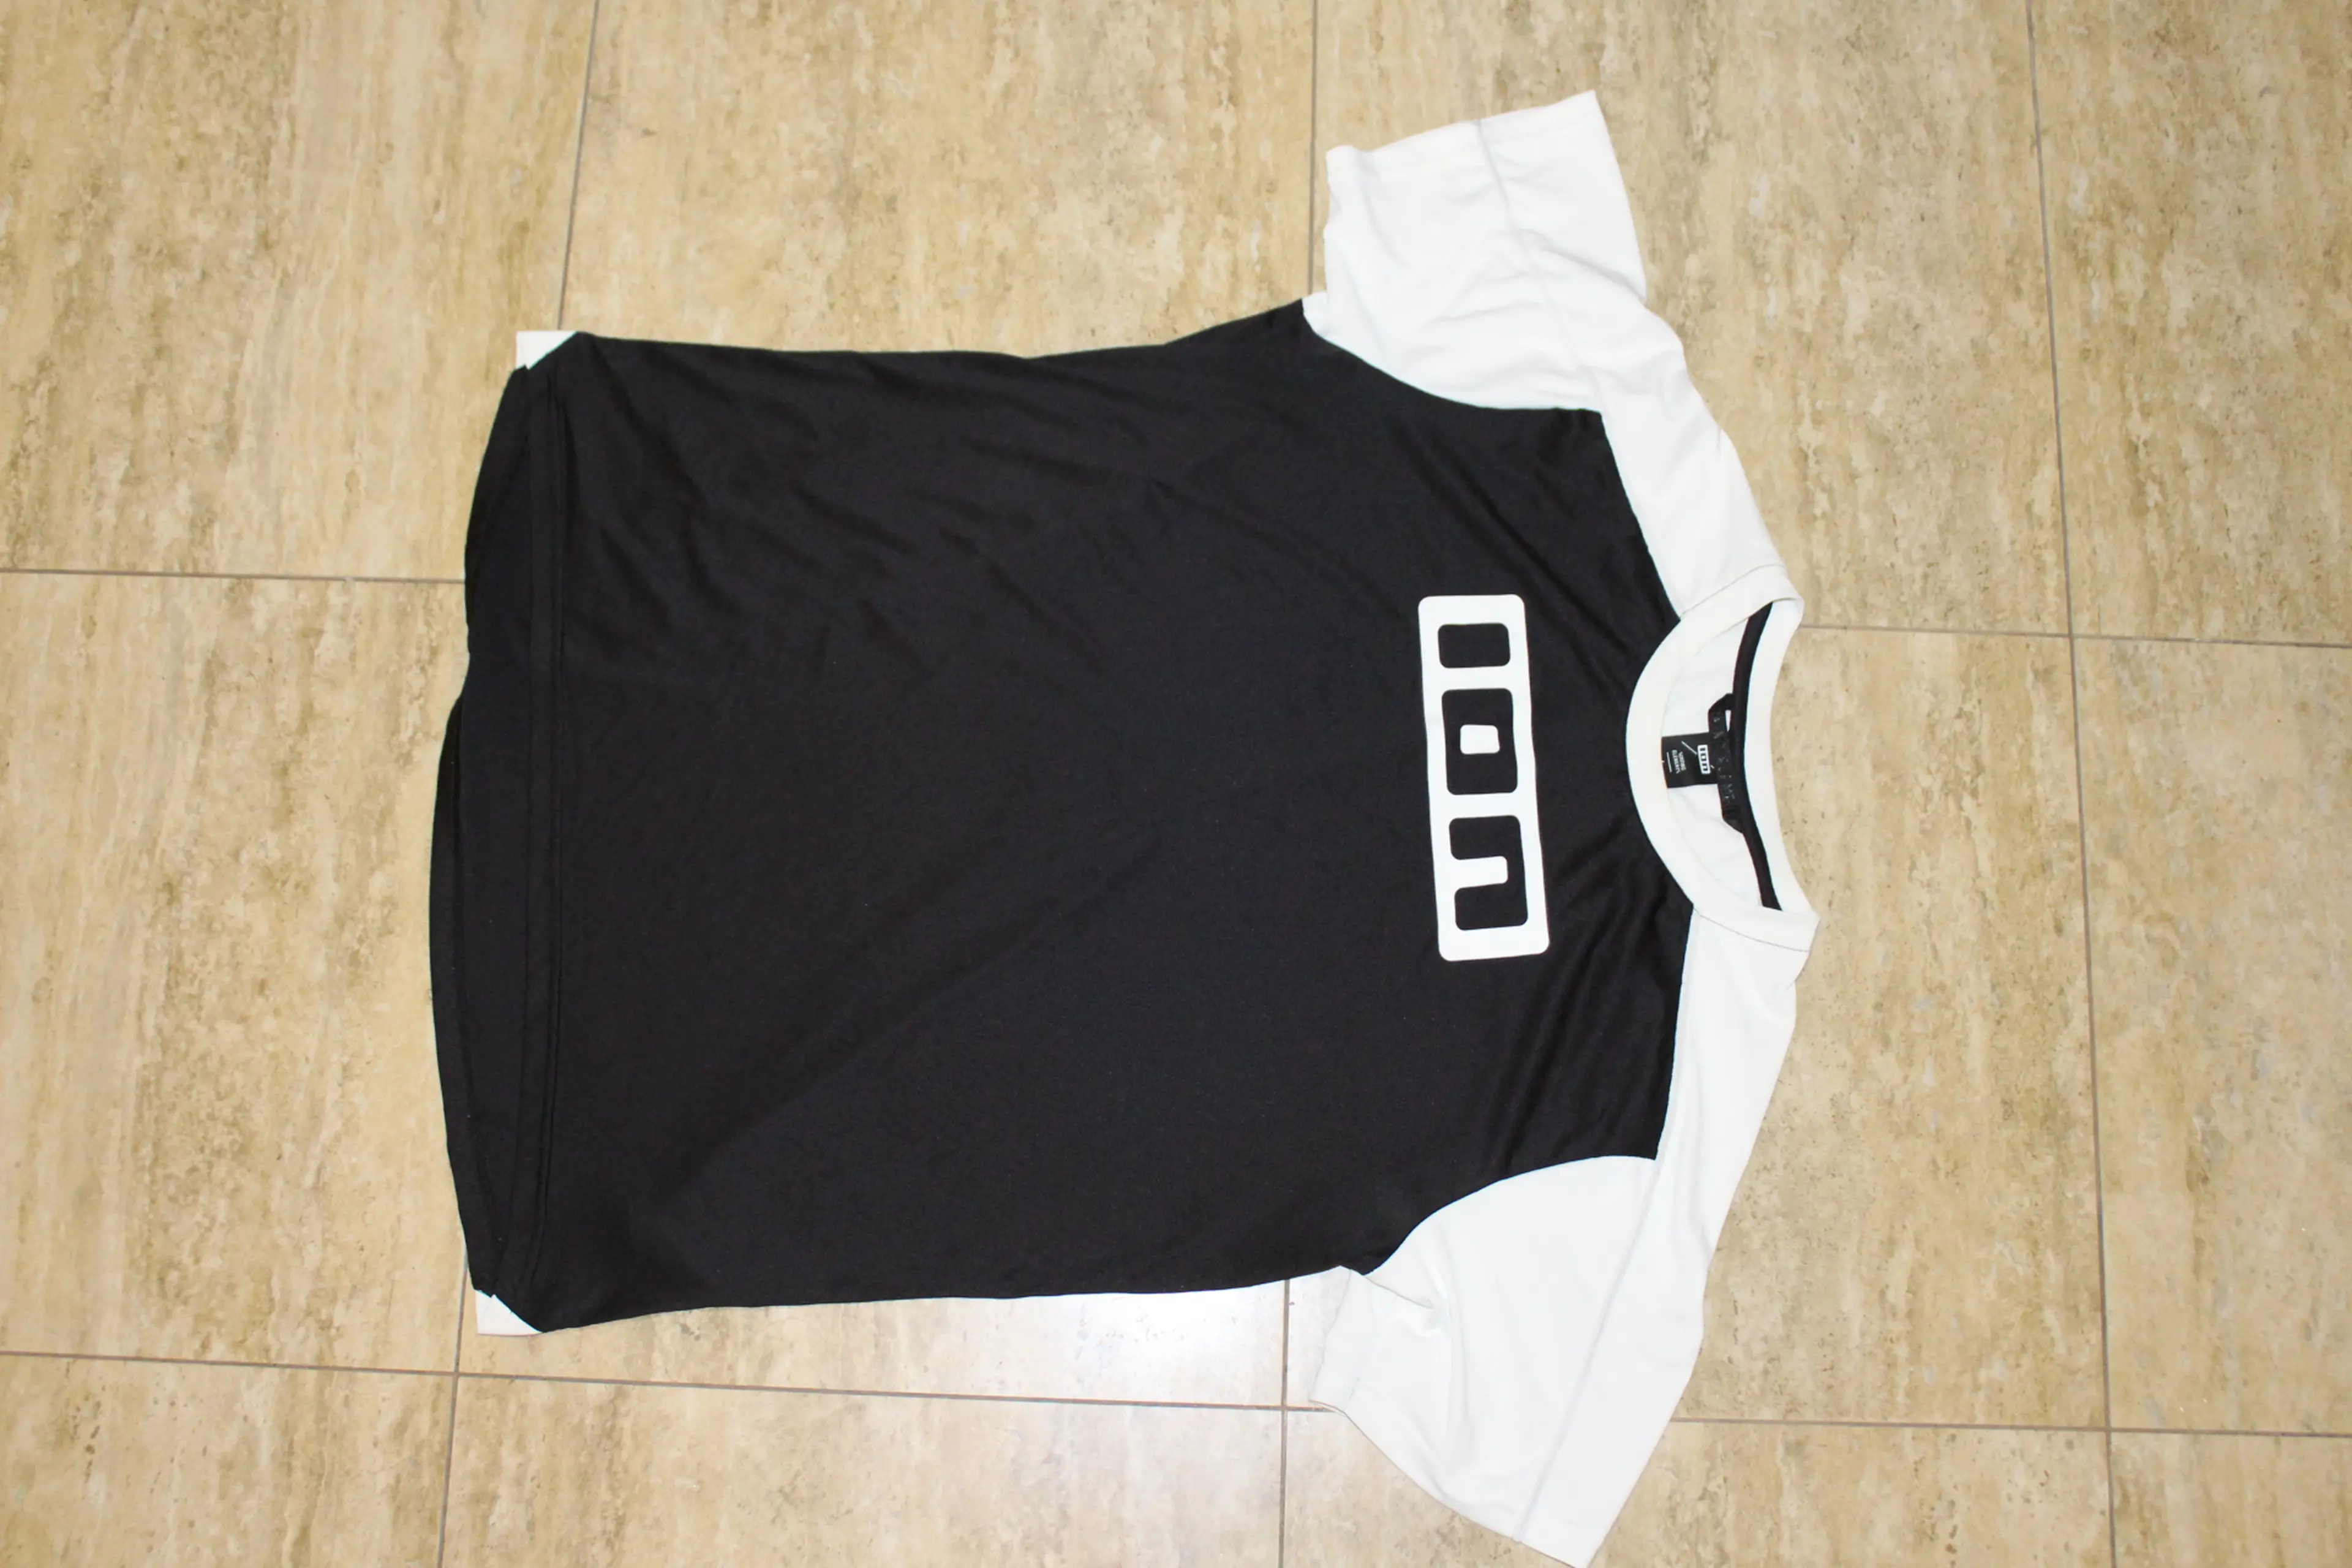 3. ION Logo jersey - Large